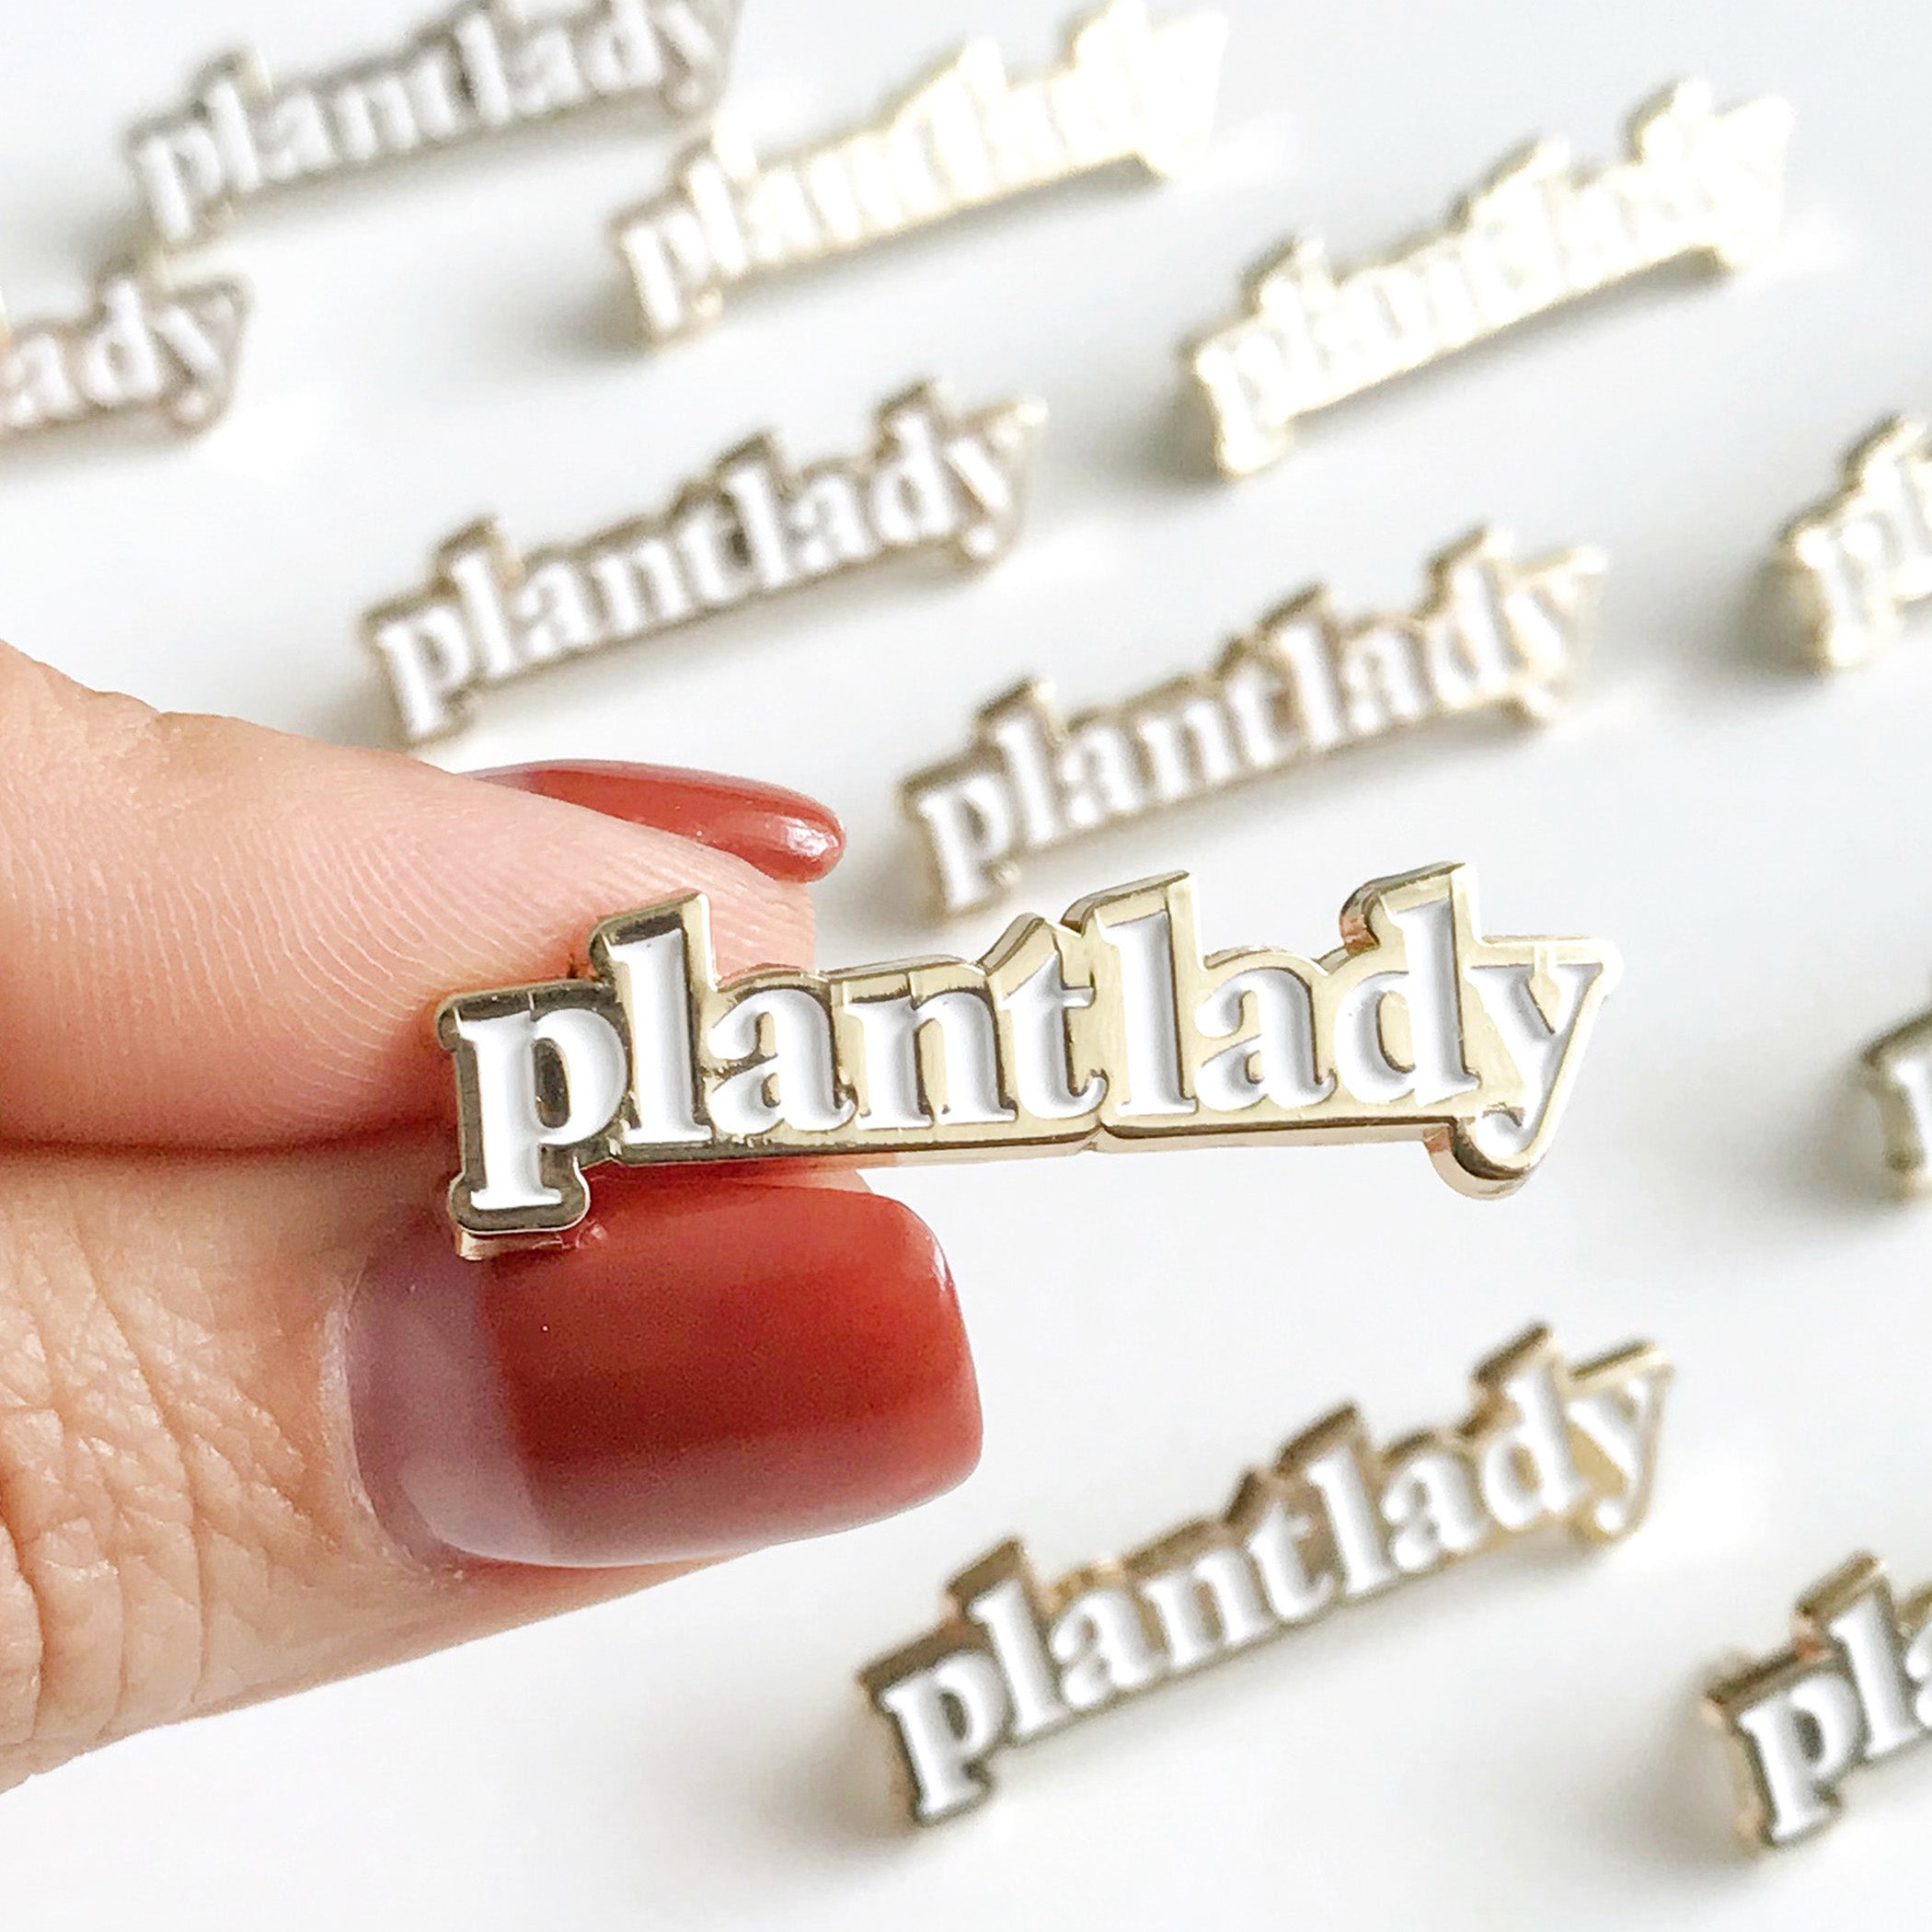 Plant Pins